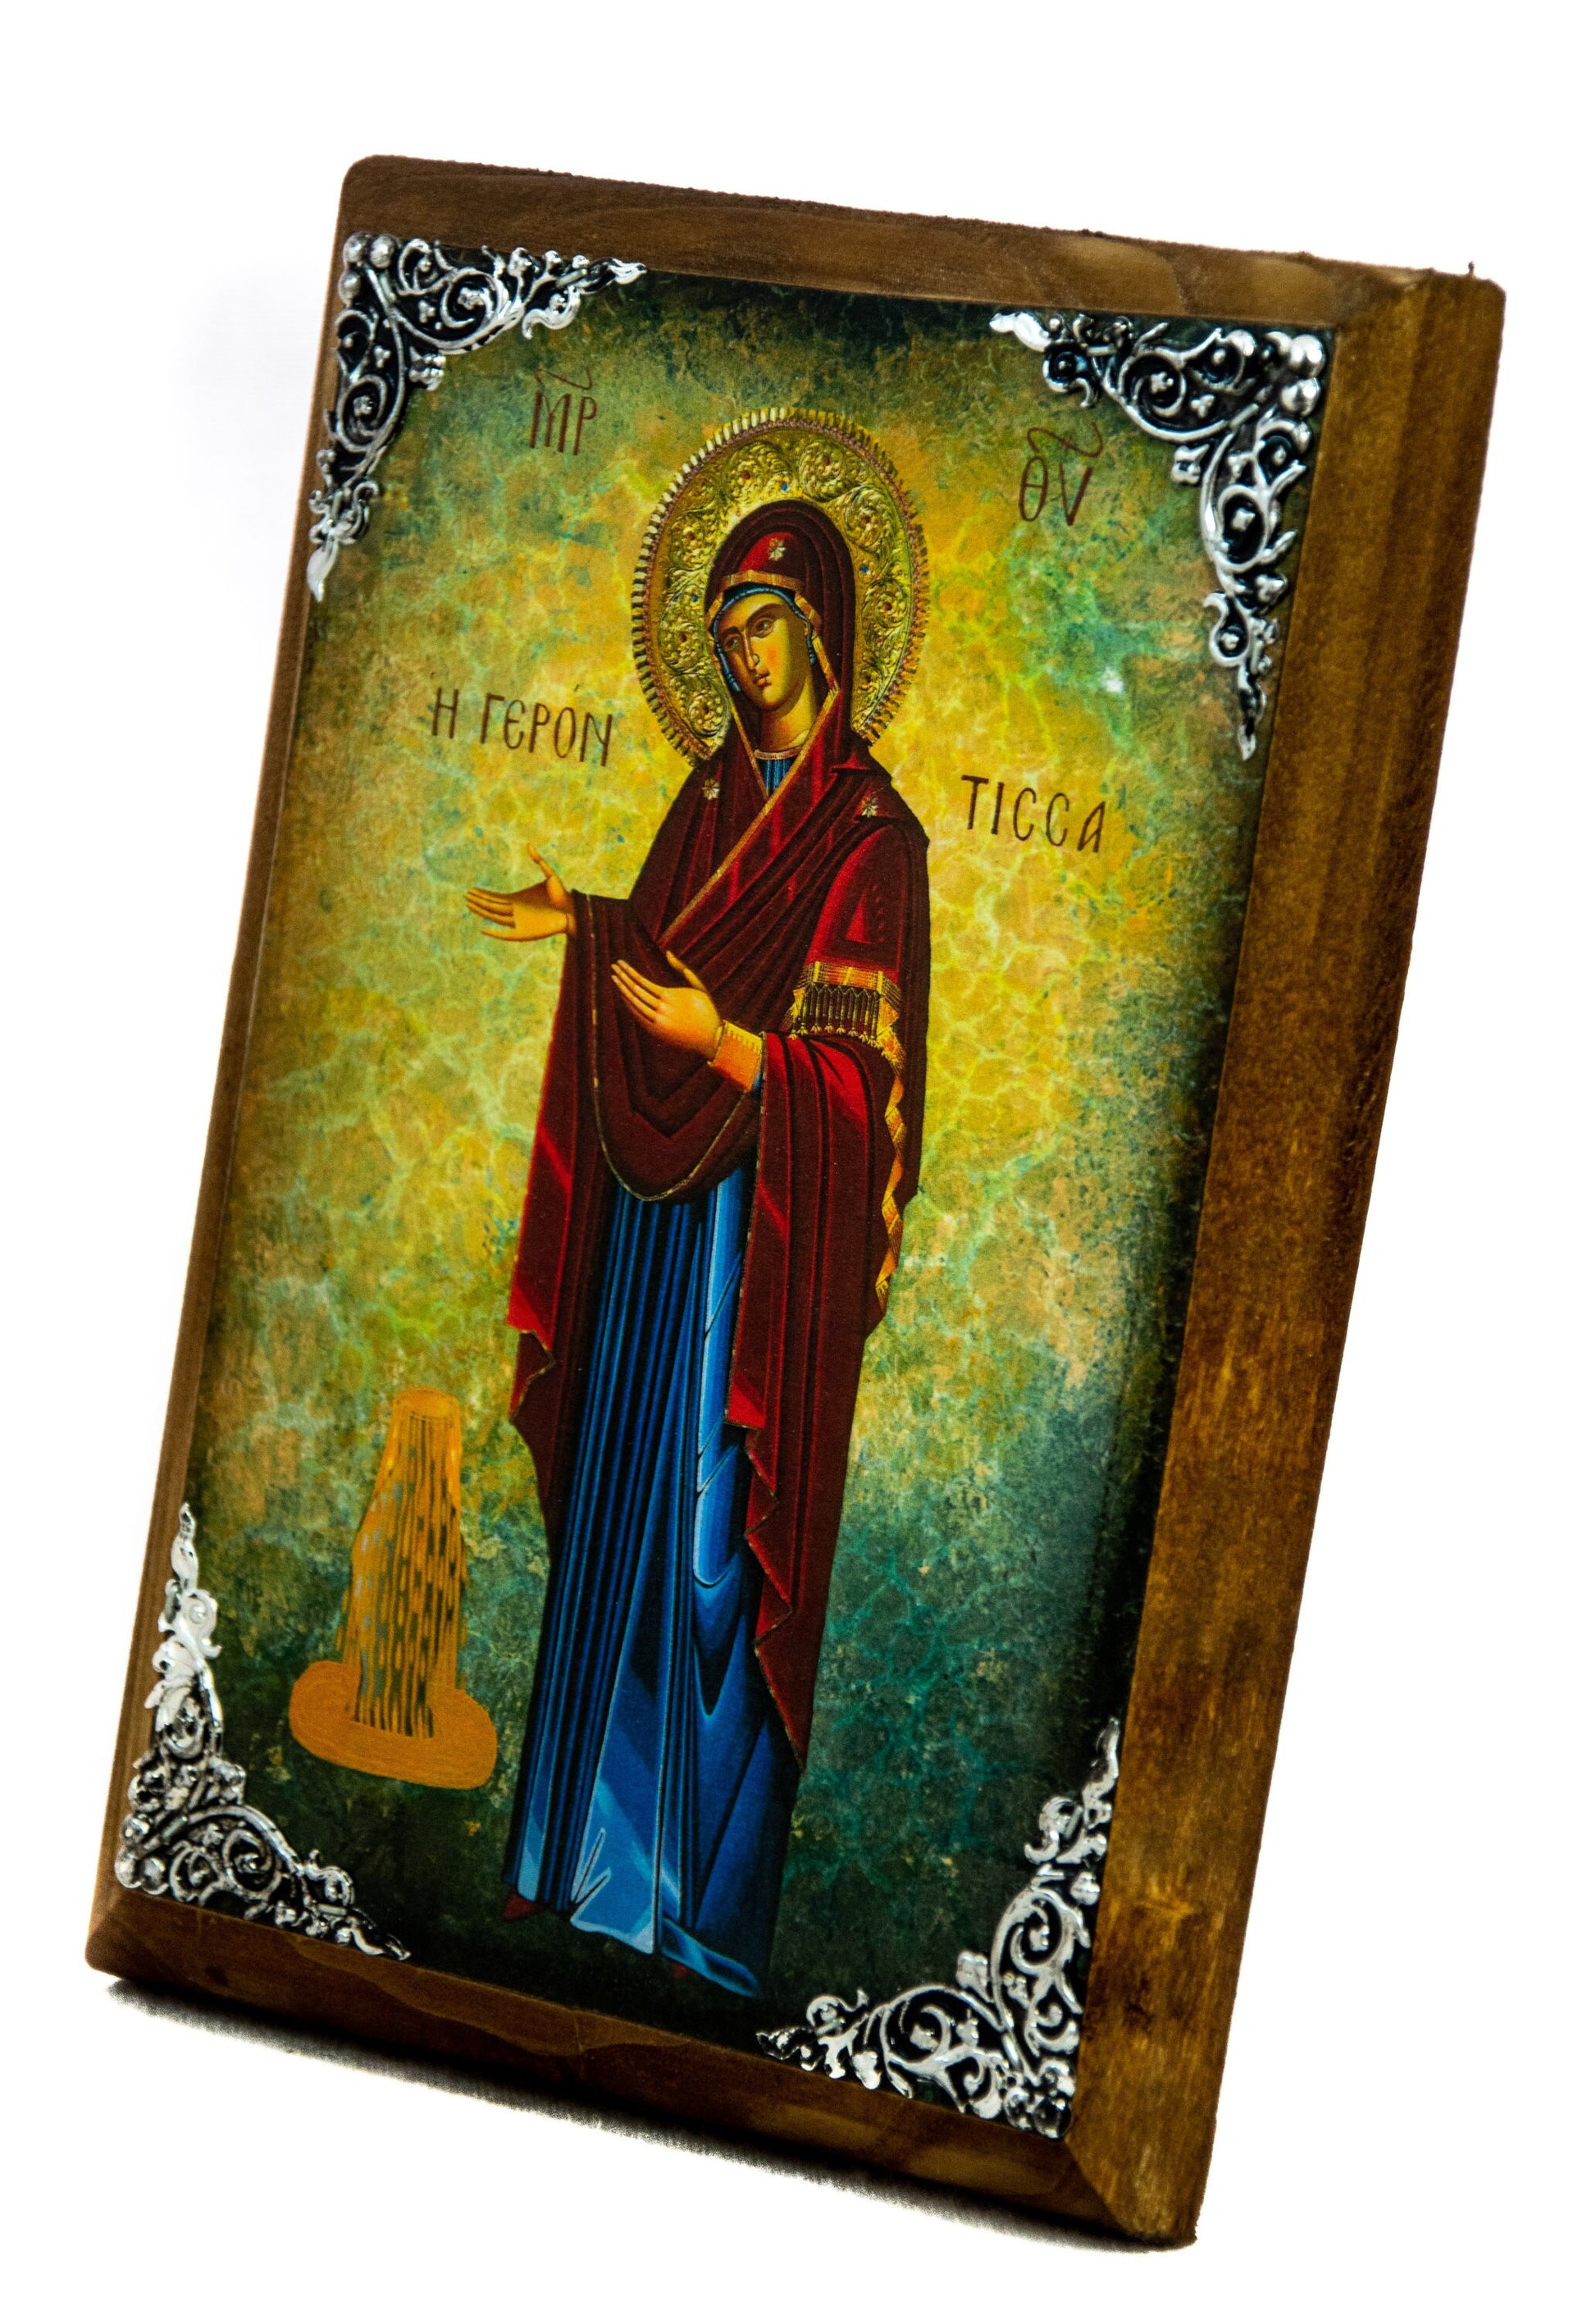 Virgin Mary icon Panagia Giatrissa, Handmade Greek Orthodox Icon, Mother of God Byzantine art, Theotokos wall hanging wood plaque decor TheHolyArt